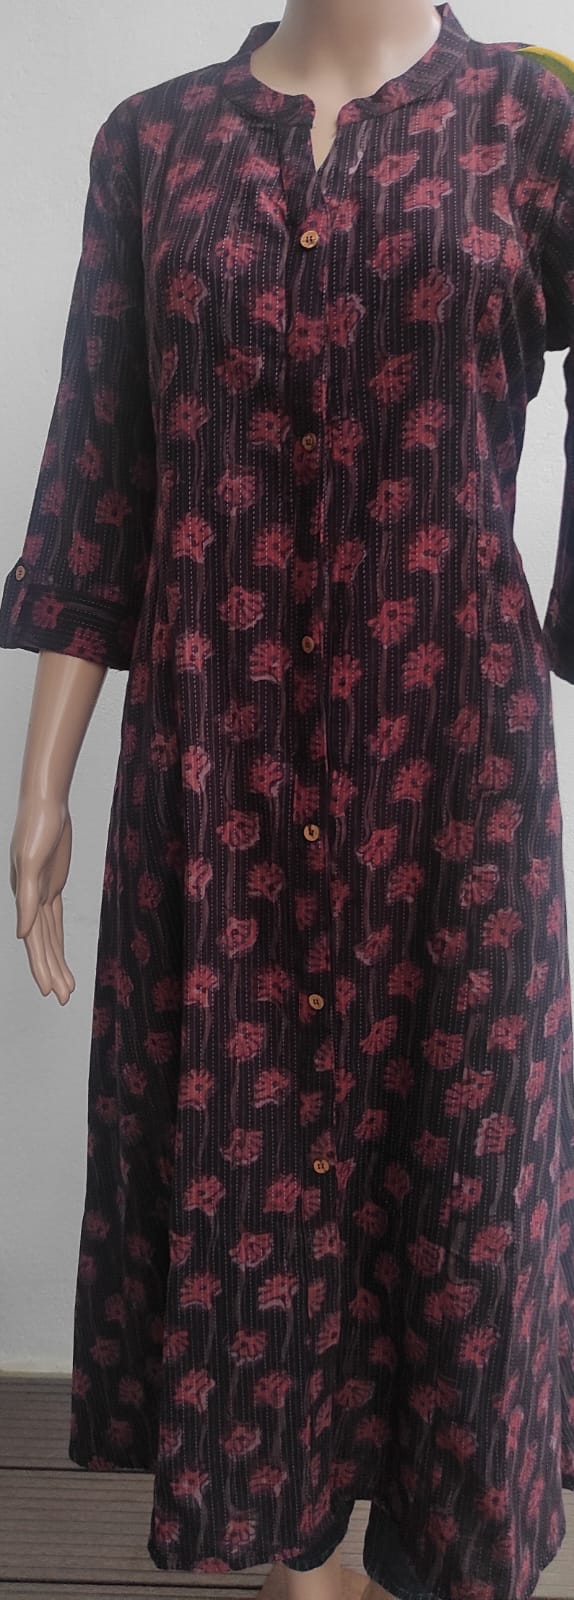 Black floral print princess cut Aline dress - Ethinic Work Wear front vertical front profile